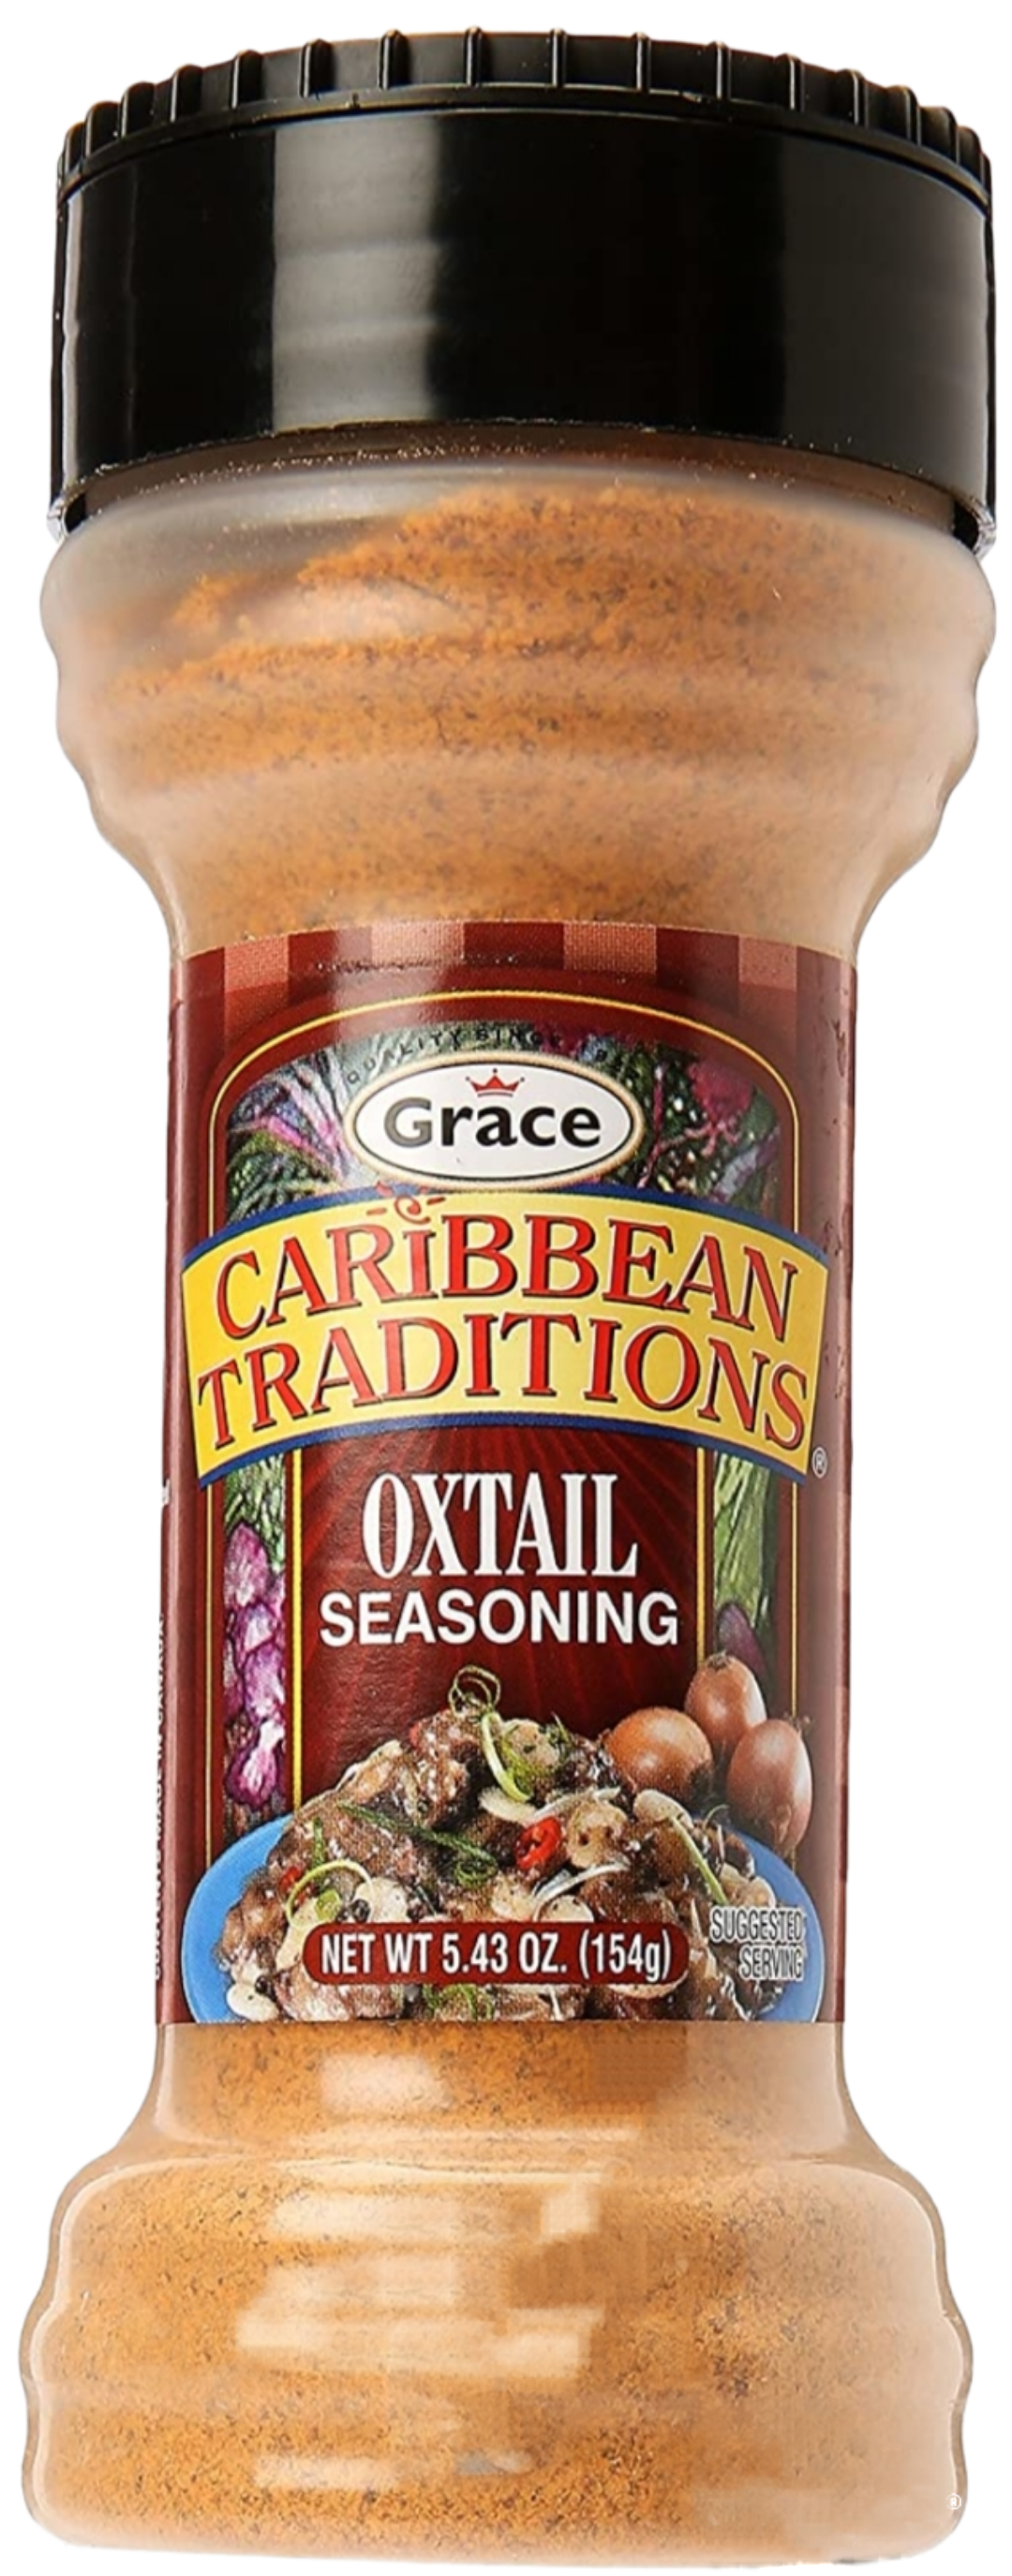 GRACE Caribbean Traditions Seasonings 5.43oz